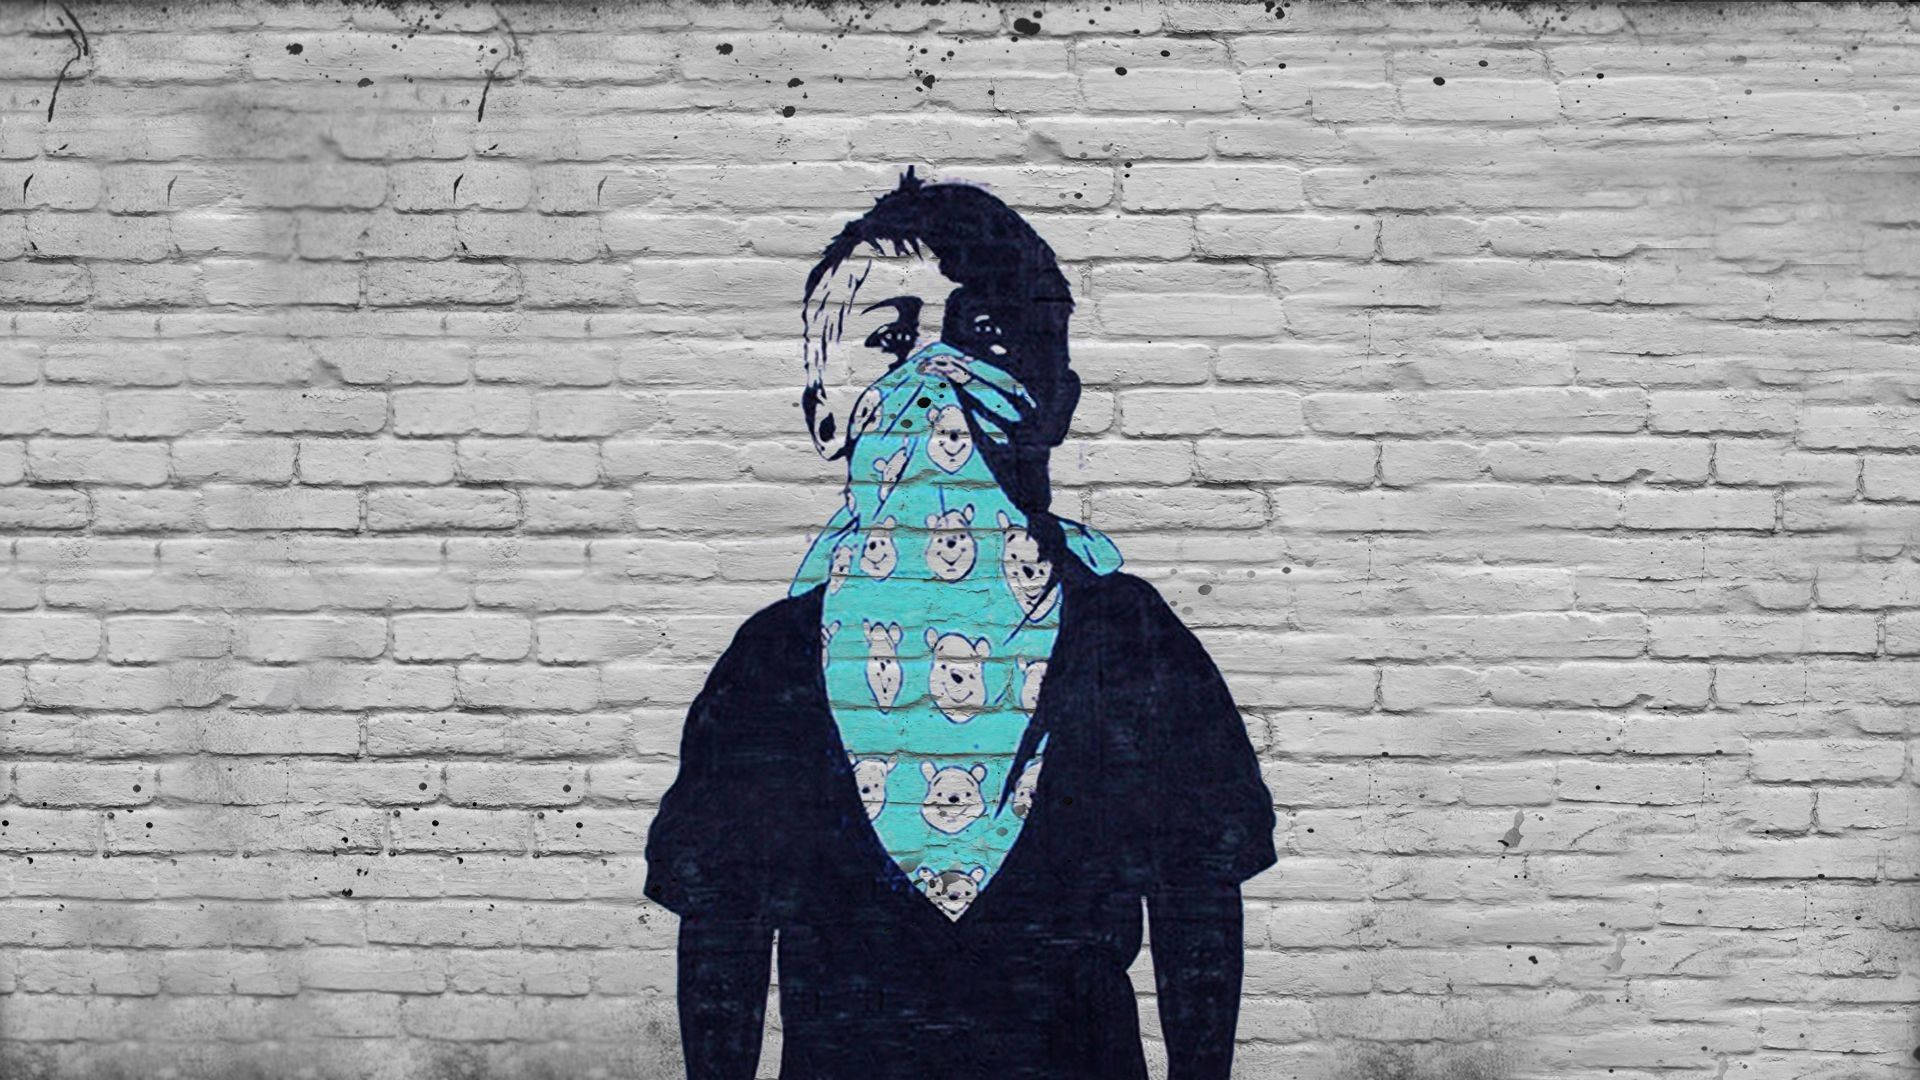 Free Banksy Wallpaper Downloads, [100+] Banksy Wallpapers for FREE |  